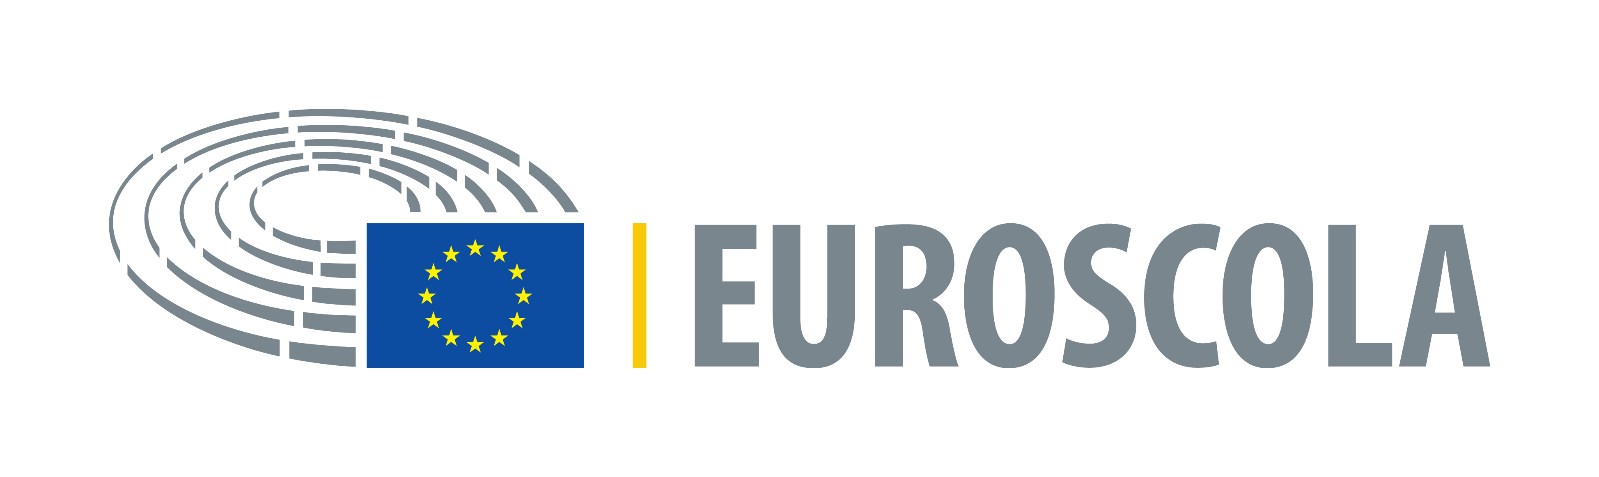 Euroscola-Programm